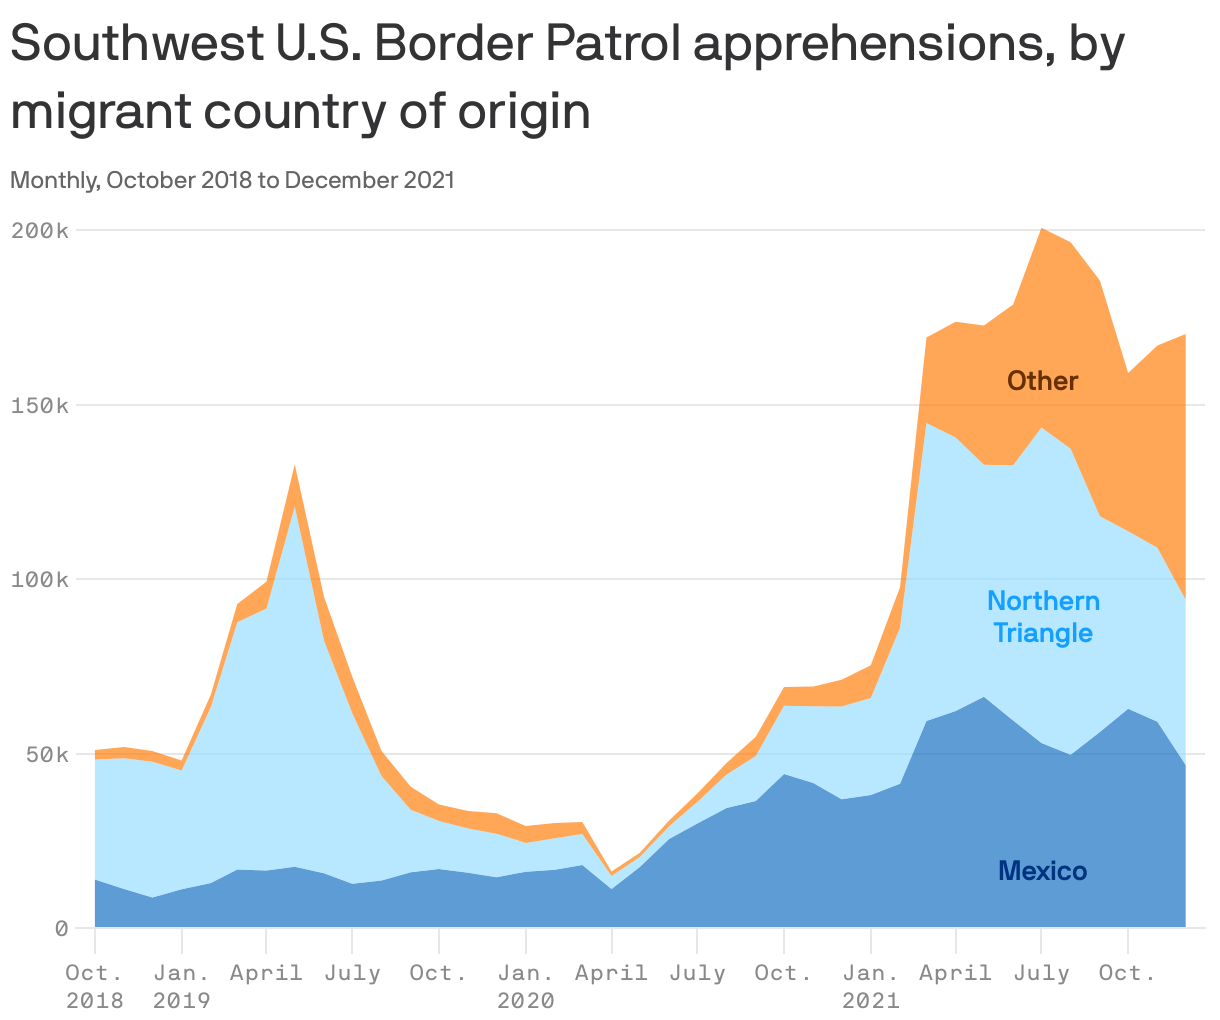 Southwest U.S. Border Patrol apprehensions, by migrant country of origin